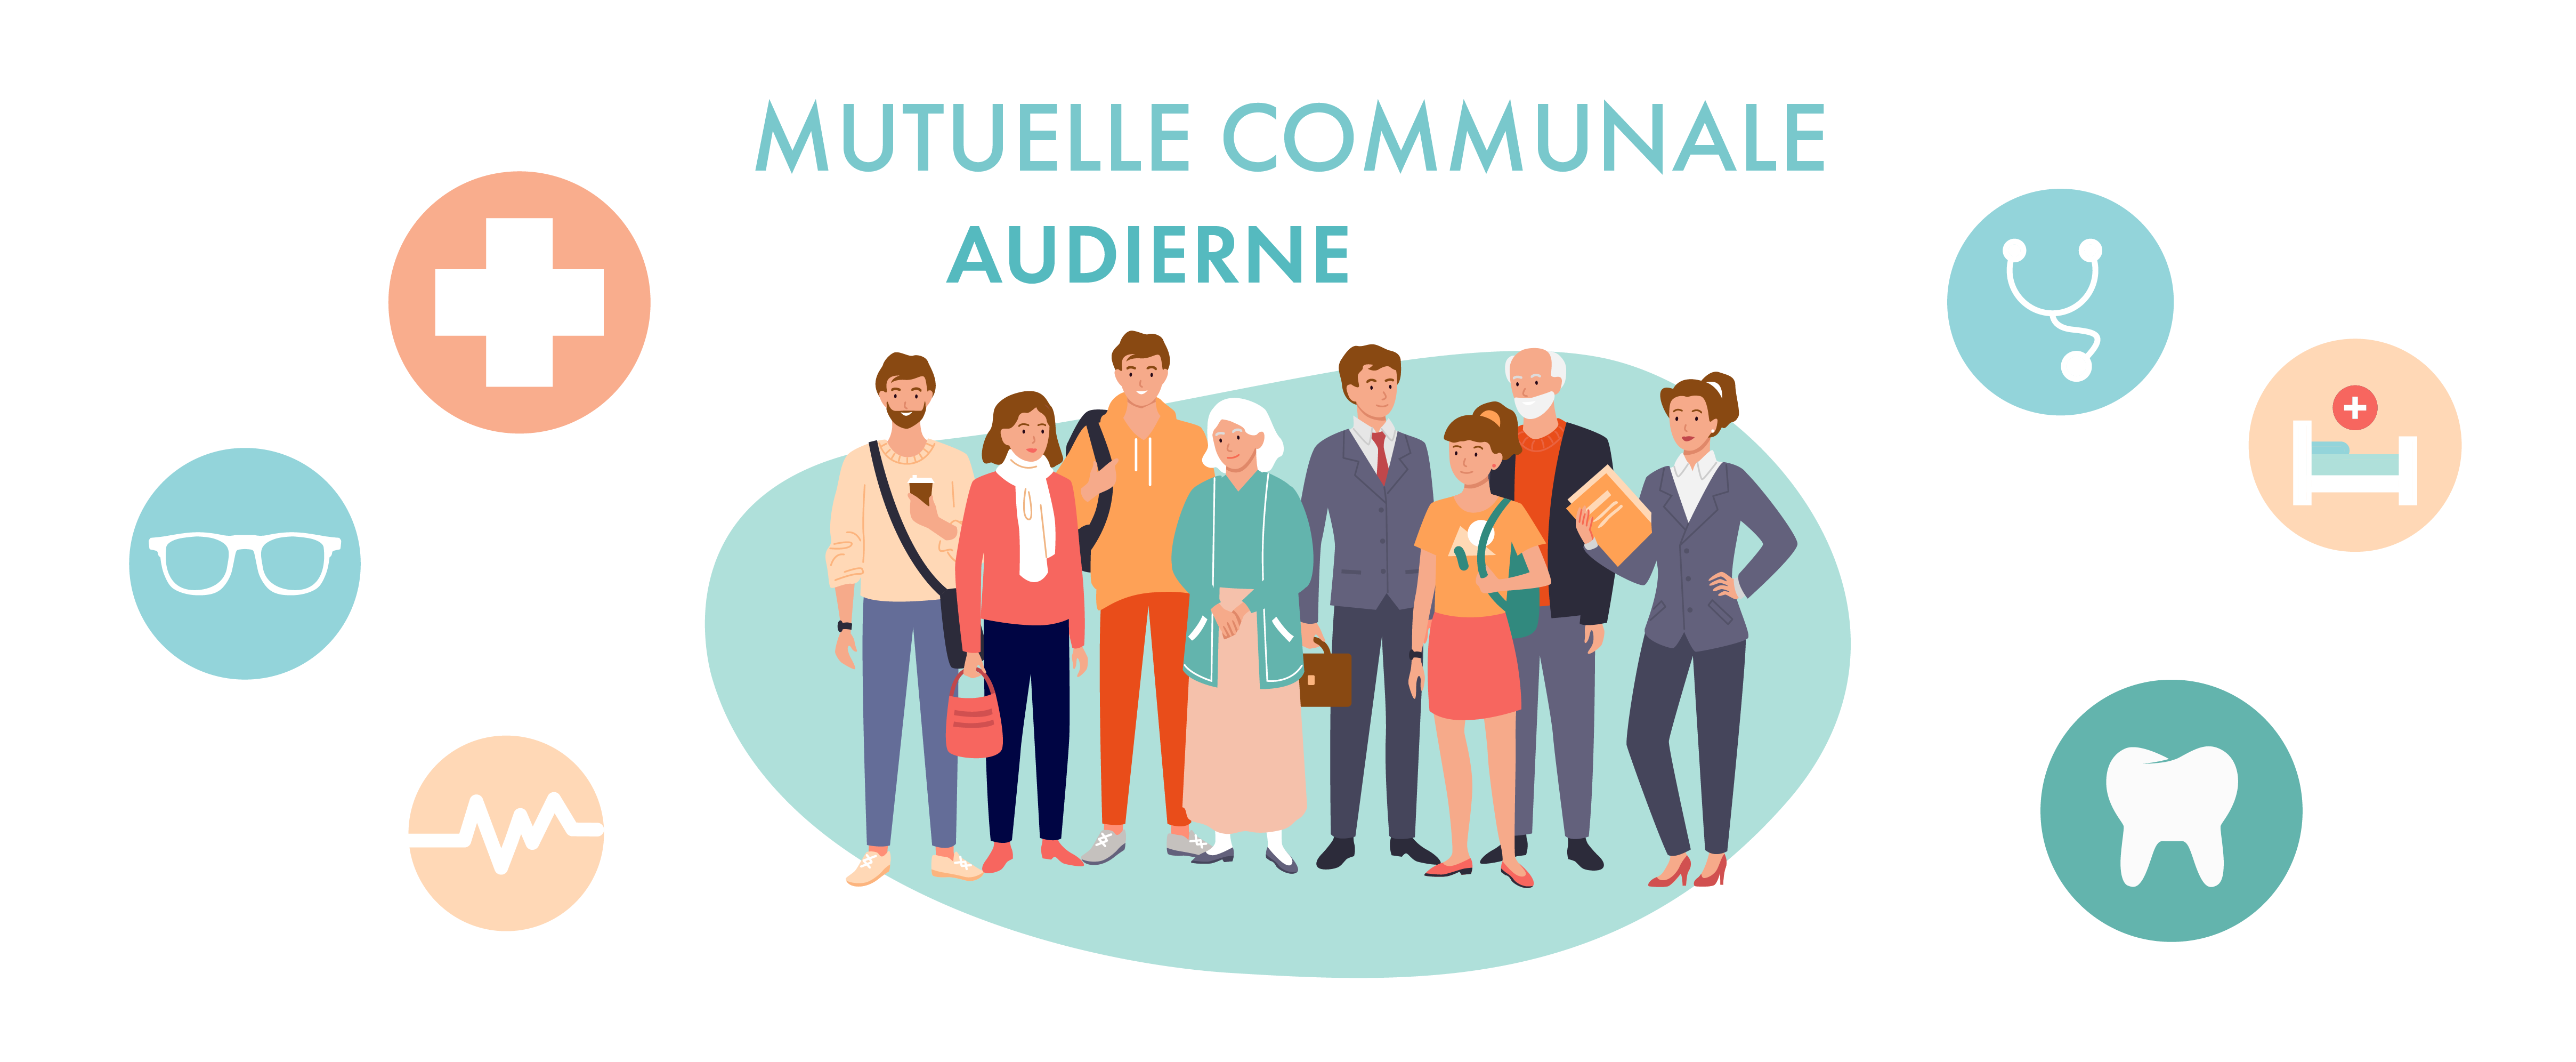 You are currently viewing Réunion publique mutuelle communale Audierne